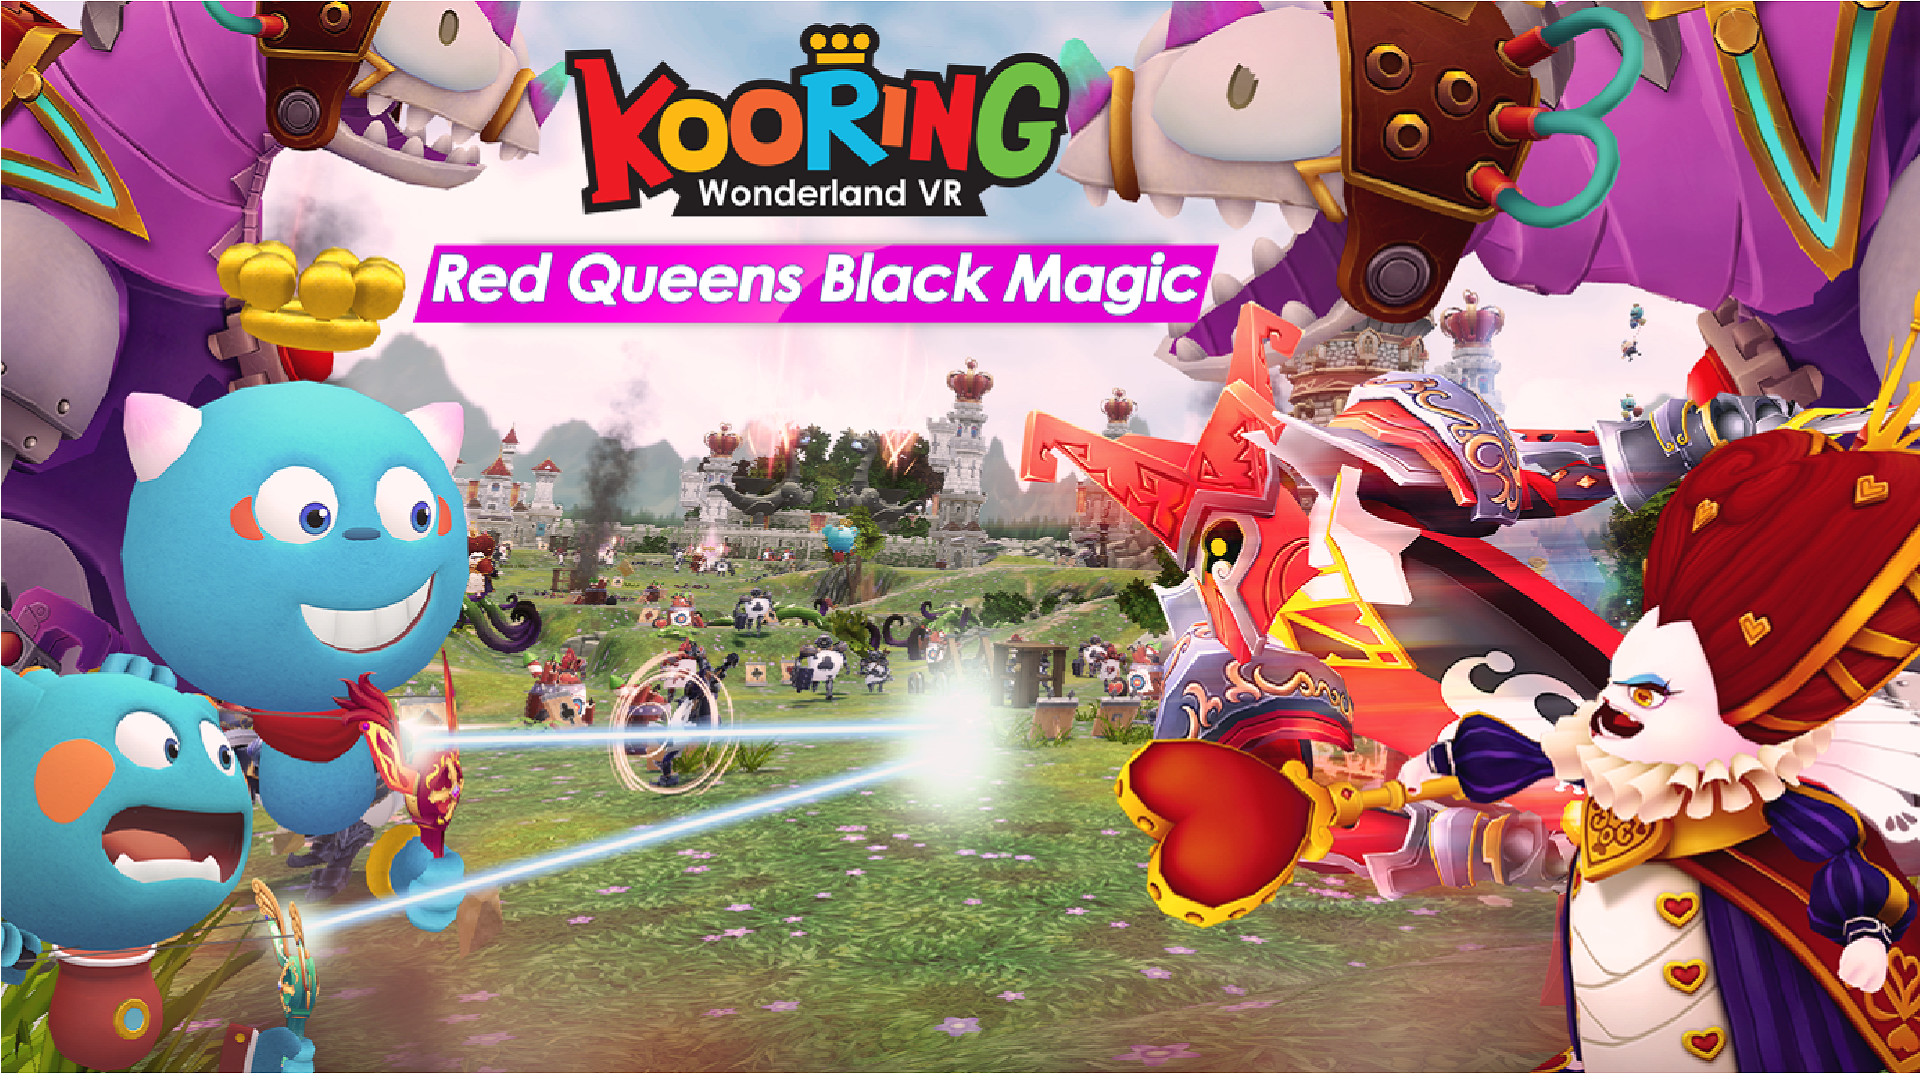 KooringVR Wonderland: Red Queen's Black Magic Steam CD Key